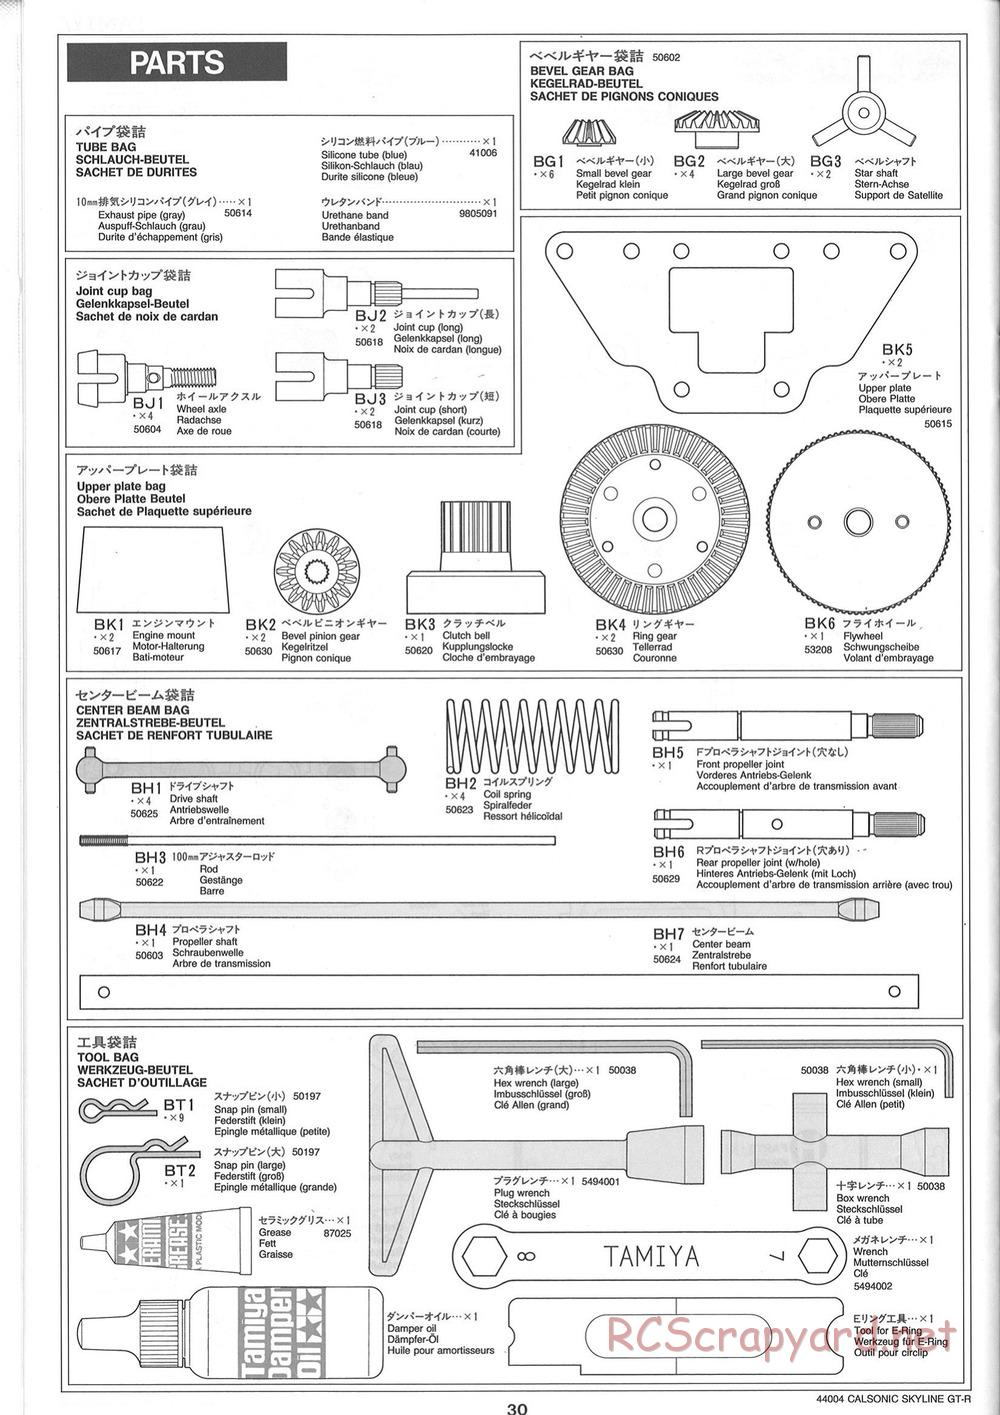 Tamiya - Calsonic GT-R - TGX Mk.1 Chassis - Manual - Page 30